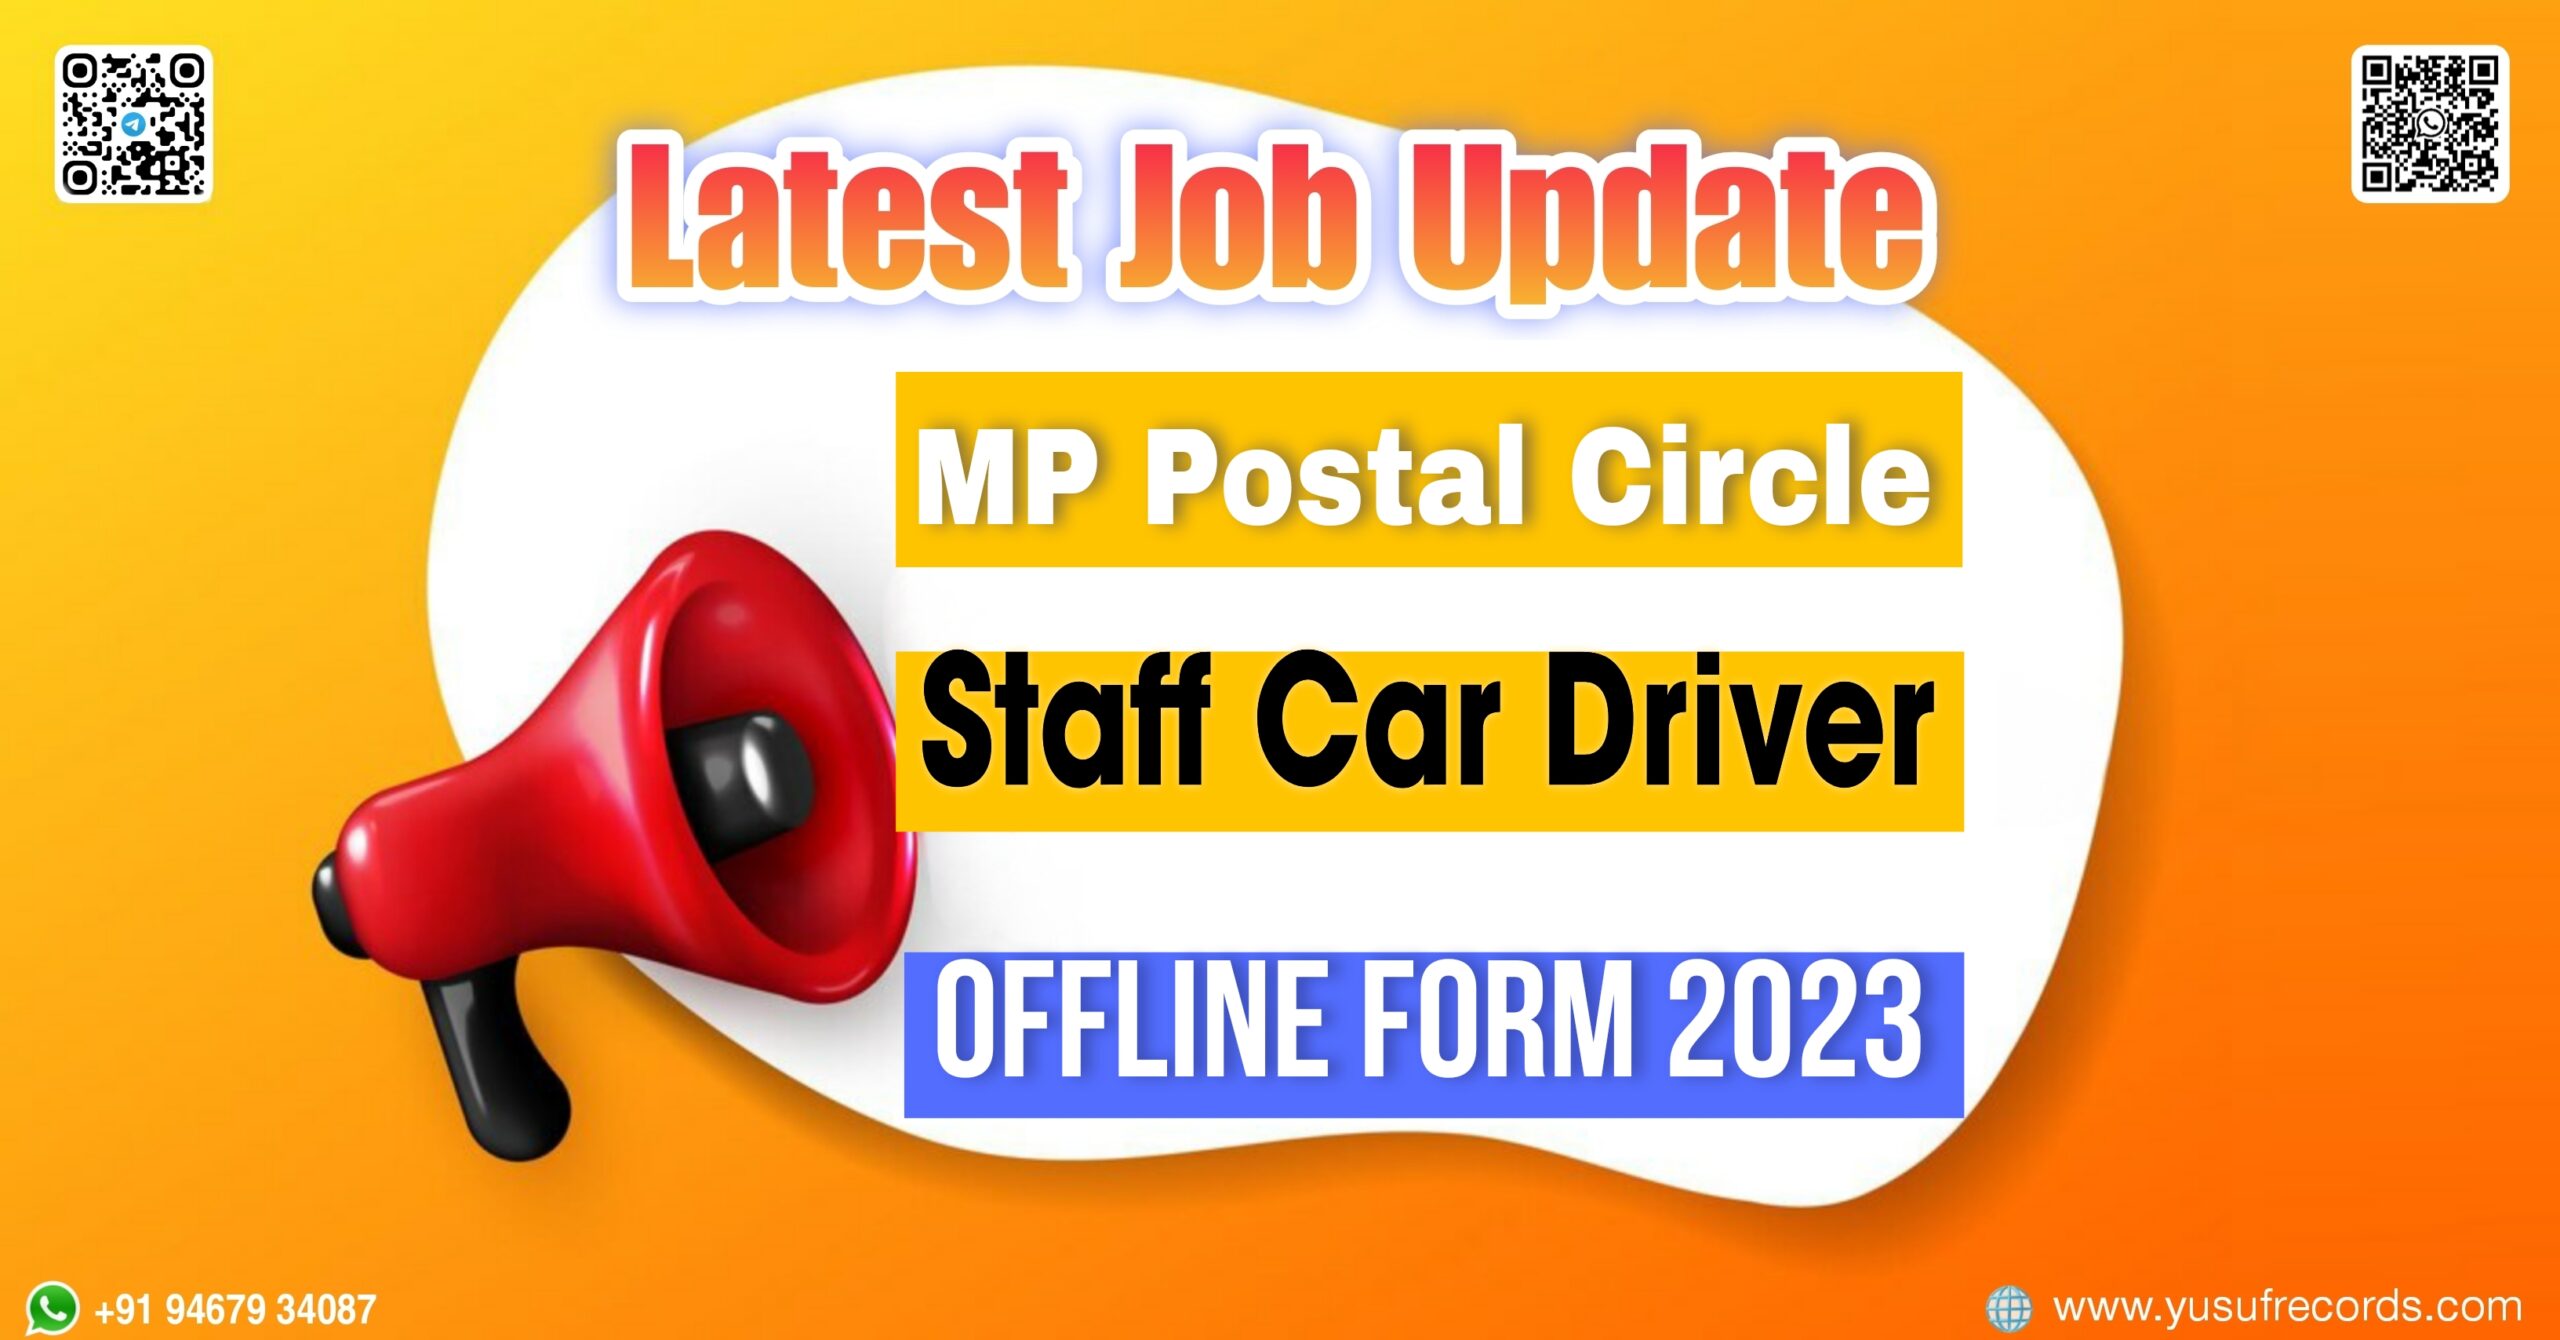 MP Postal Circle Staff Car Driver Offline Form